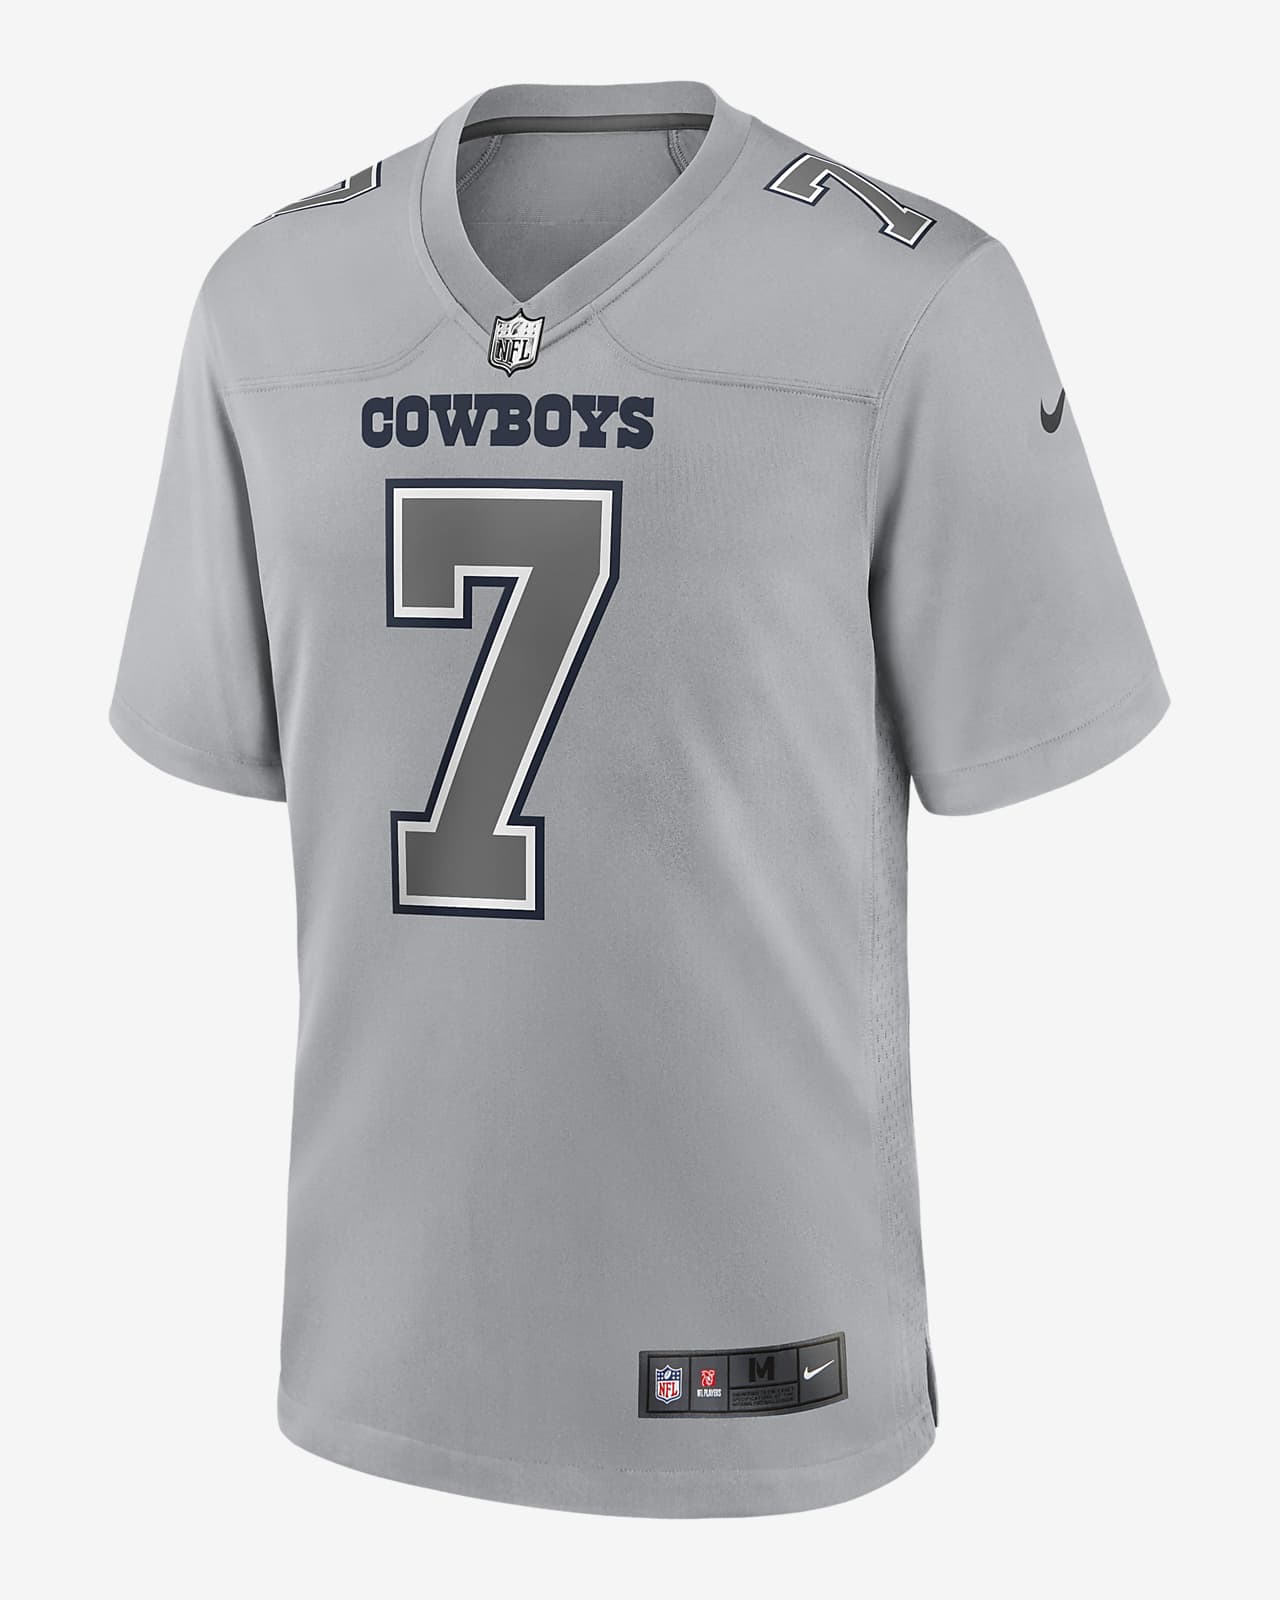 NFL Dallas Cowboys Atmosphere (Trevon Diggs) Men's Fashion Football Jersey